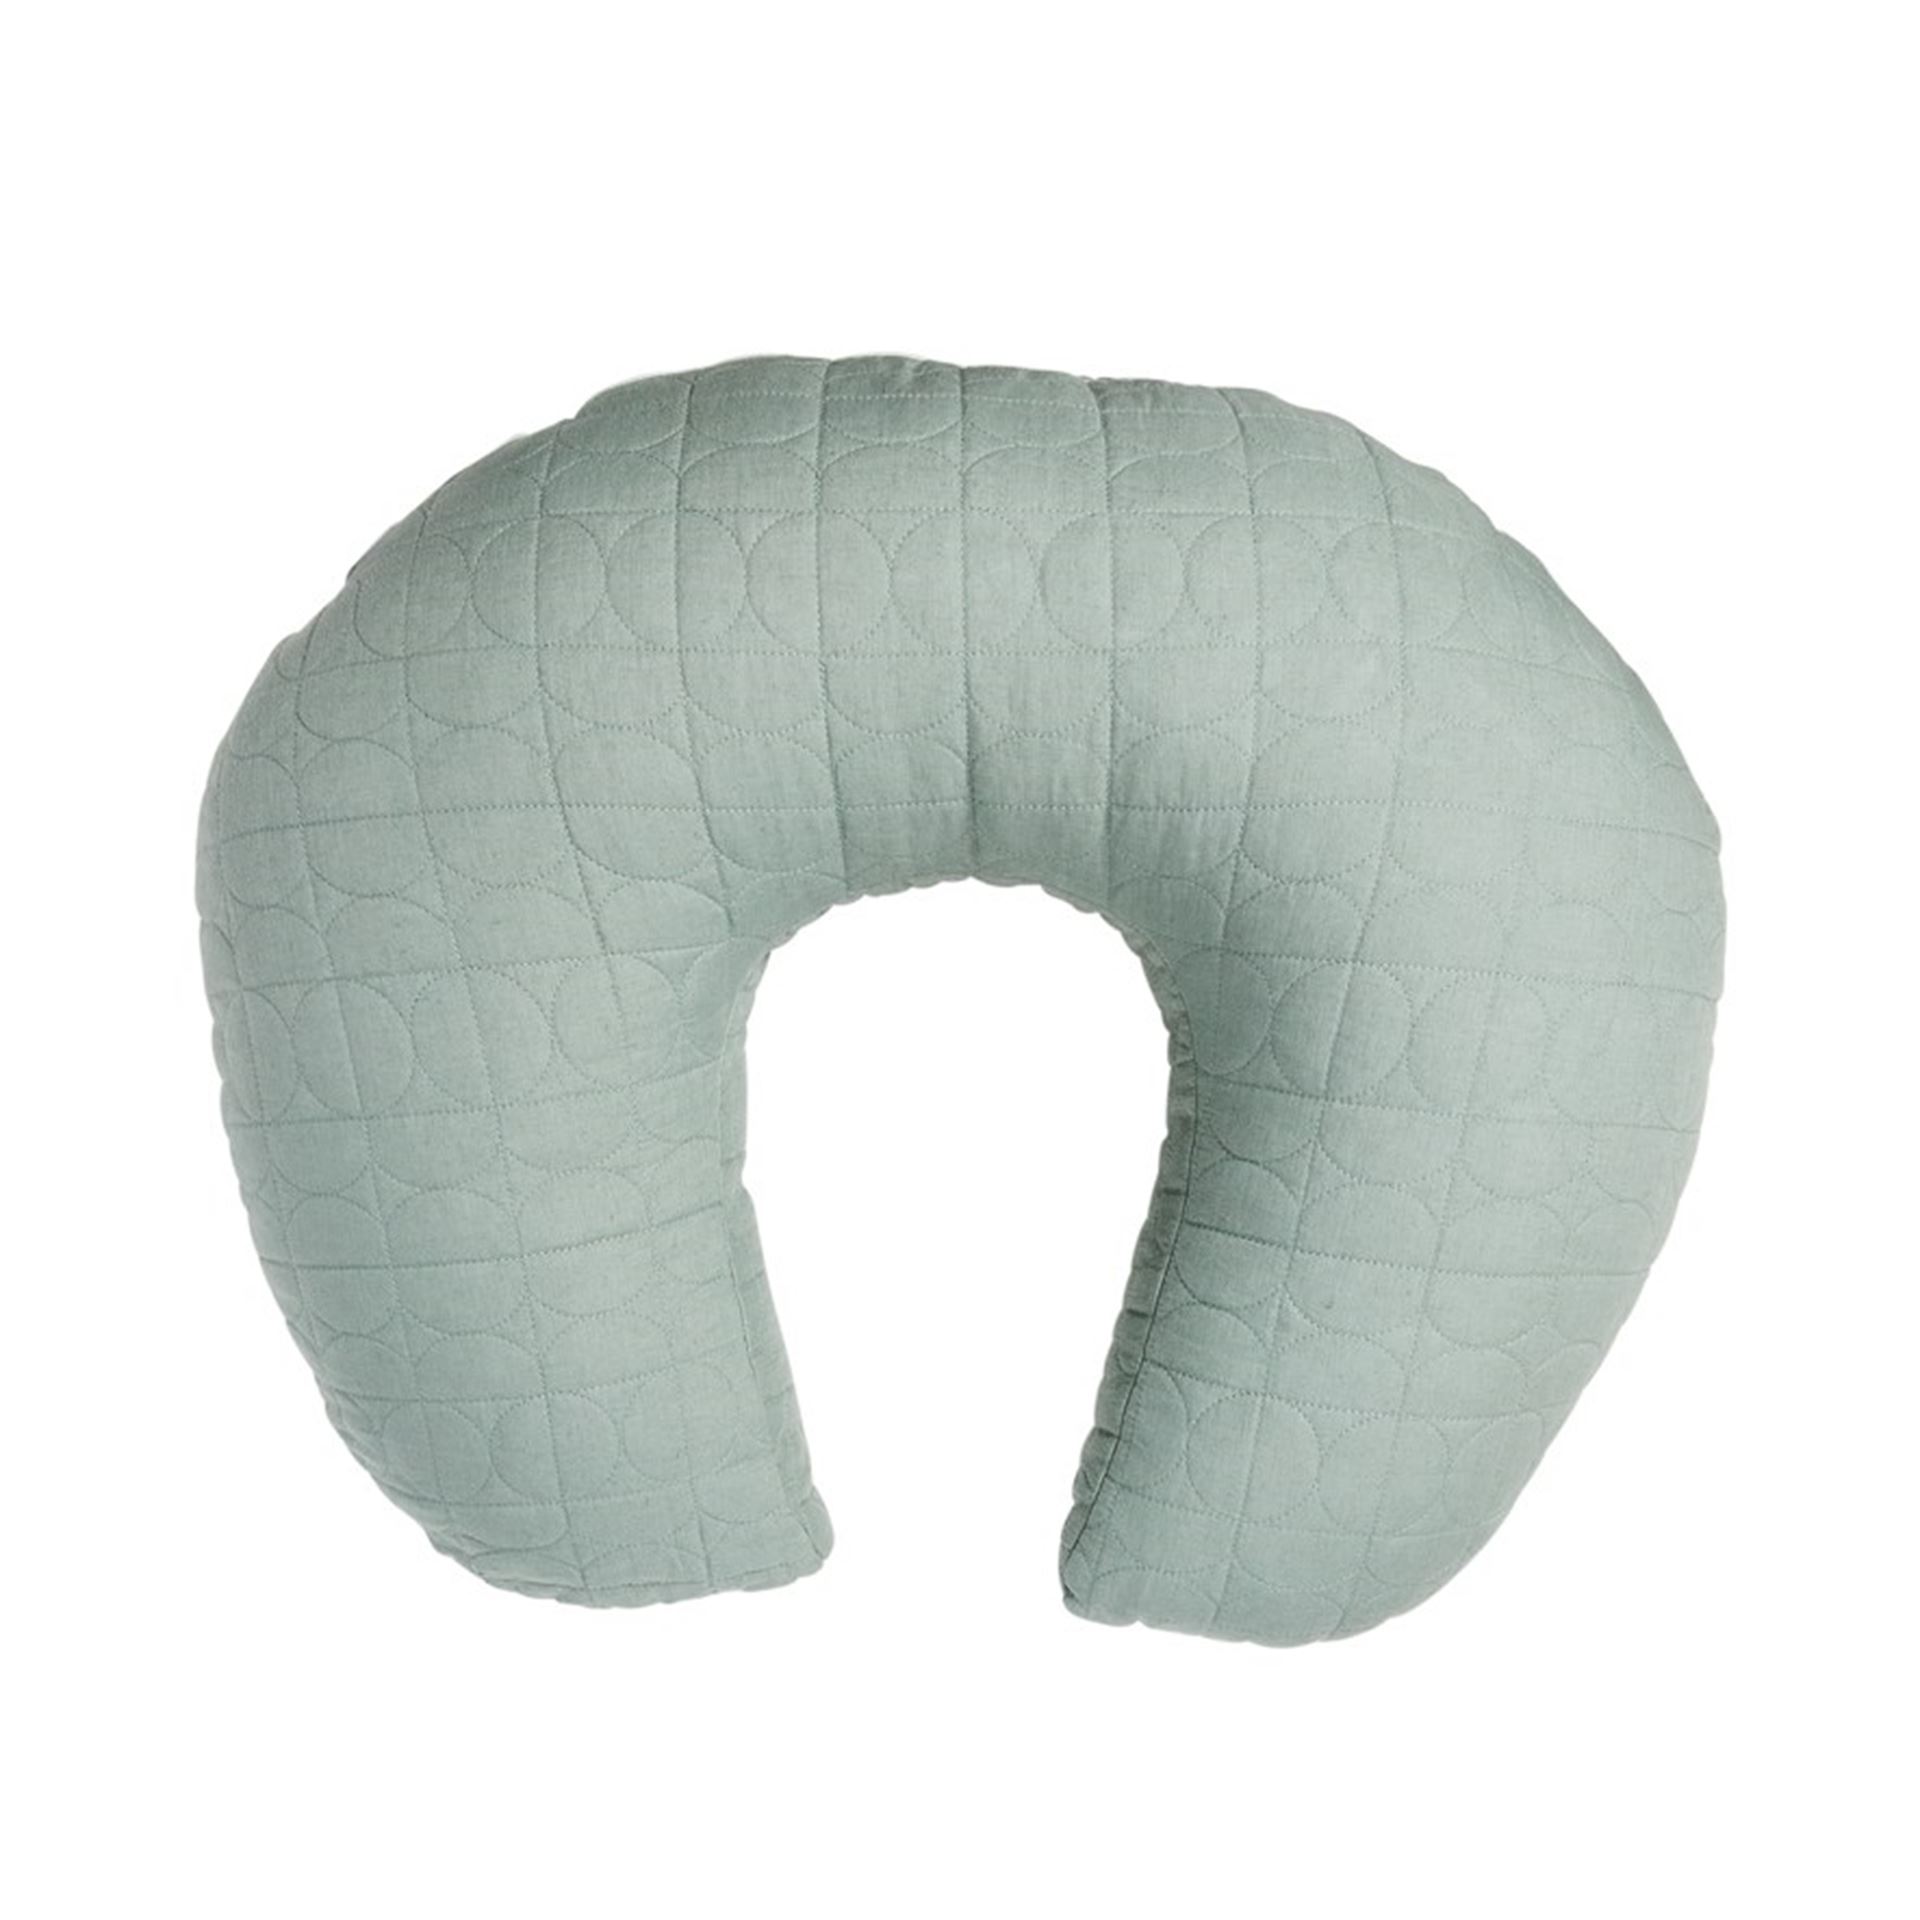 Nursing Pillows & Covers - Kmart